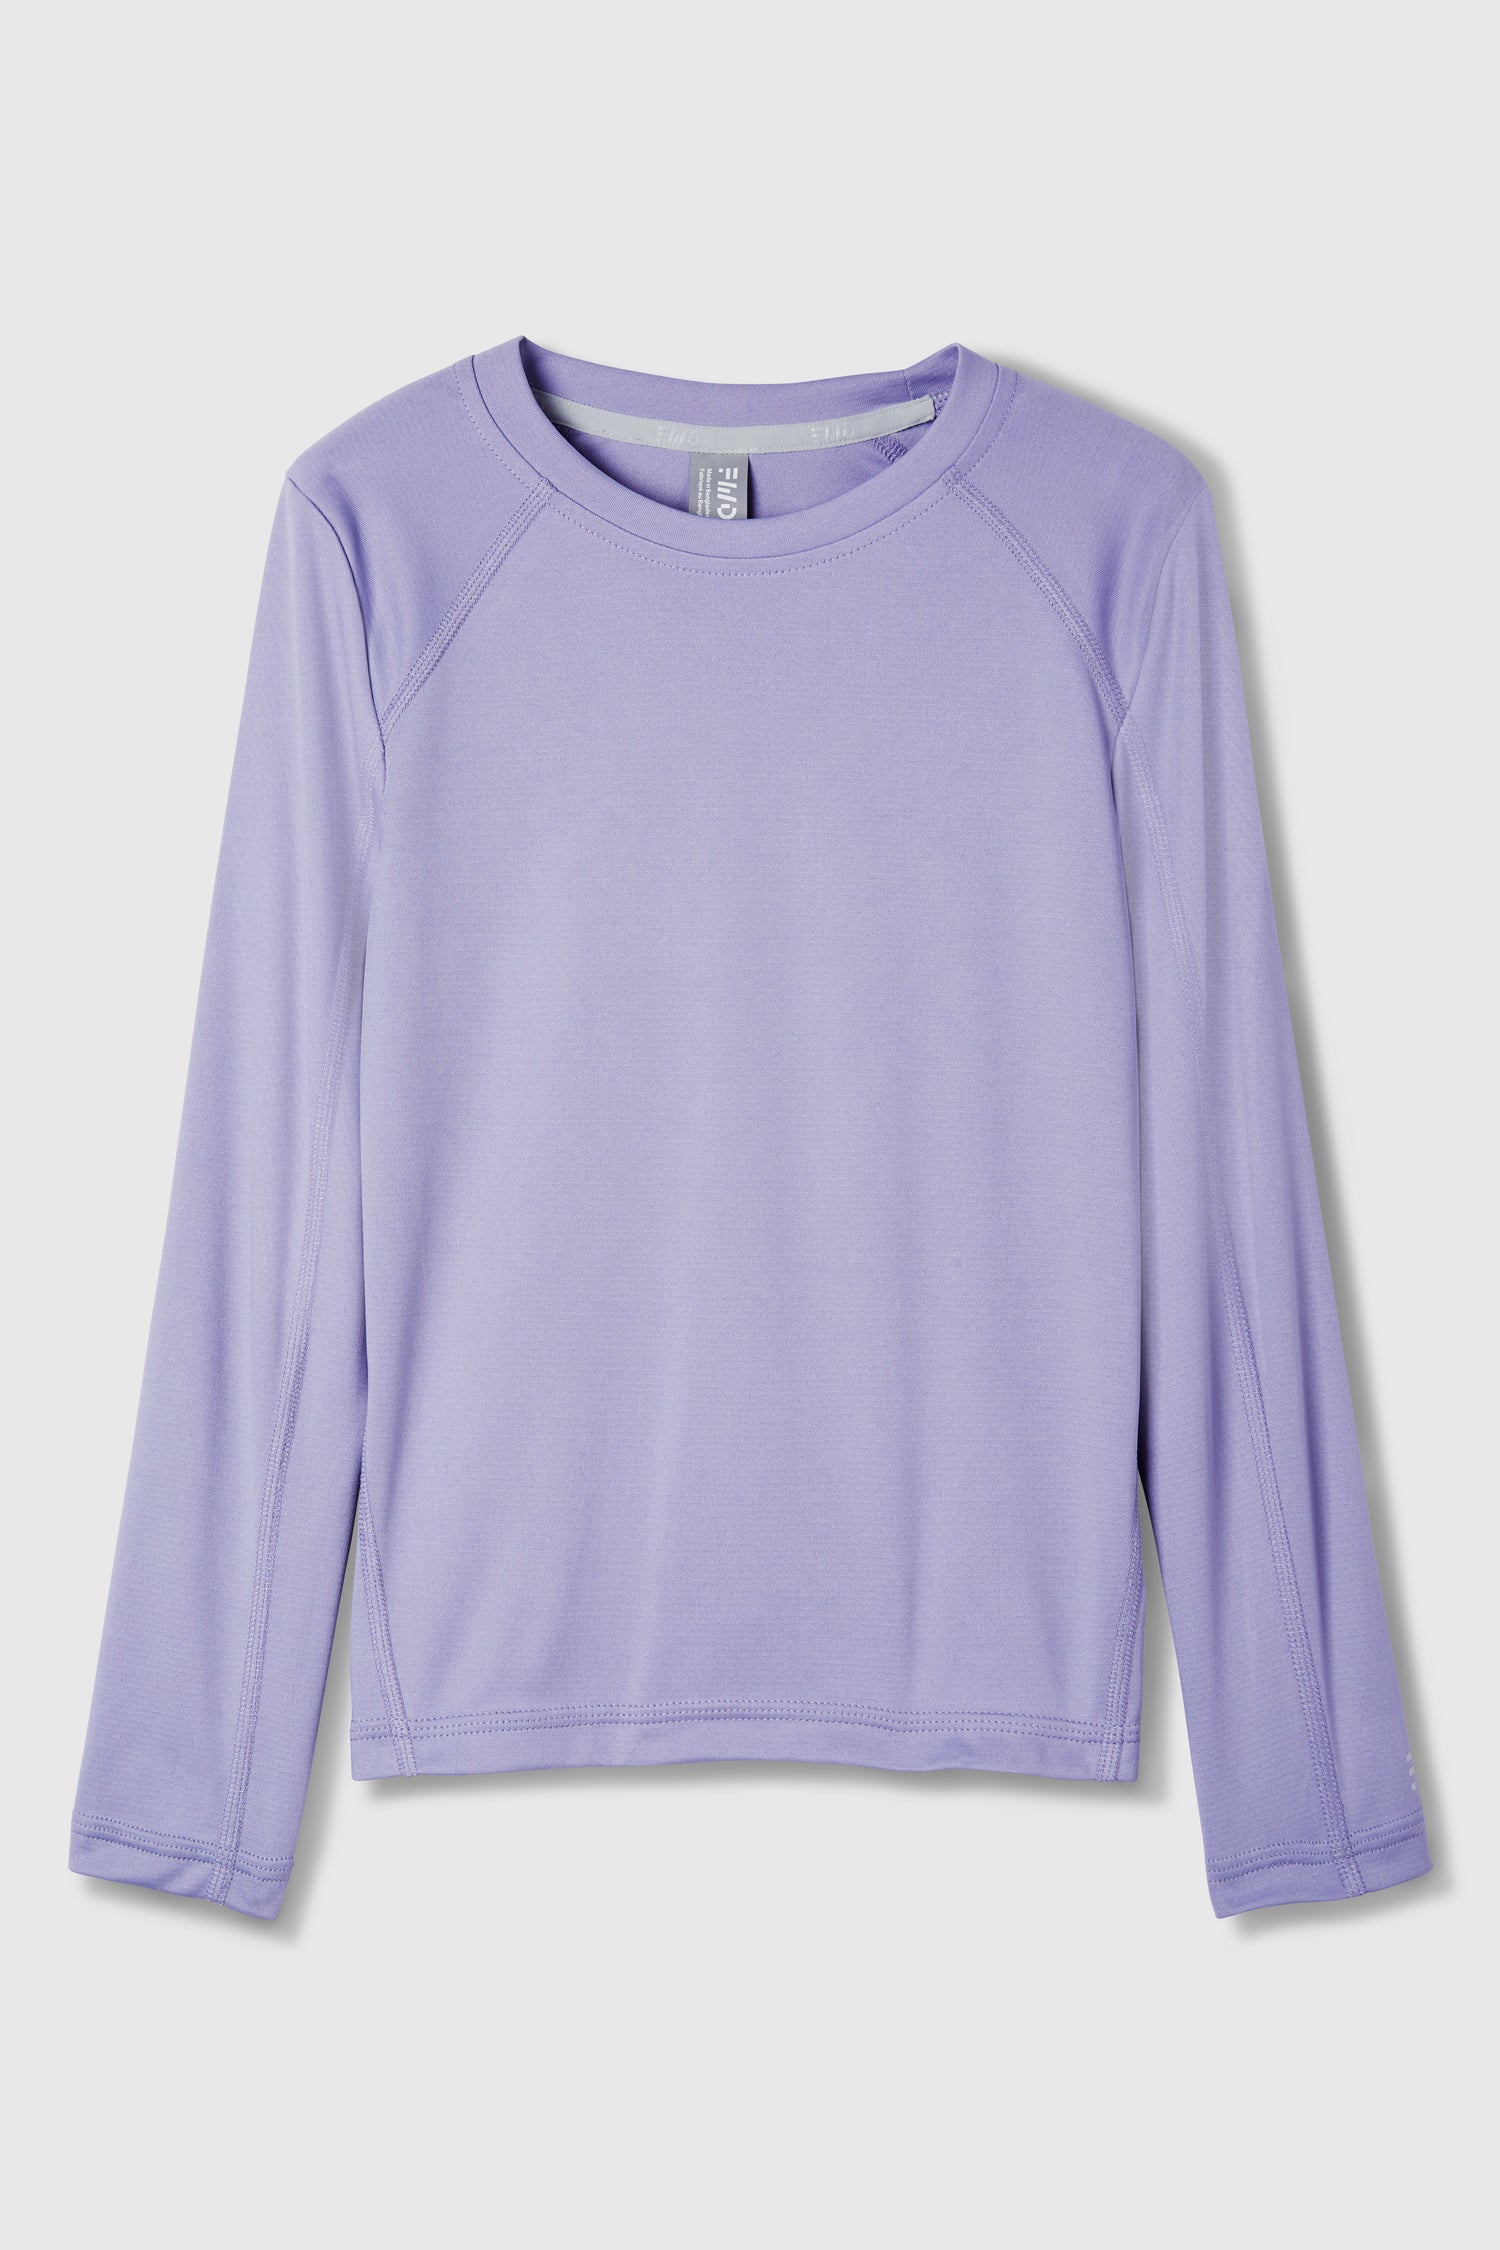 UPF / High Performance Long Sleeve Shirt - Neon Coral M